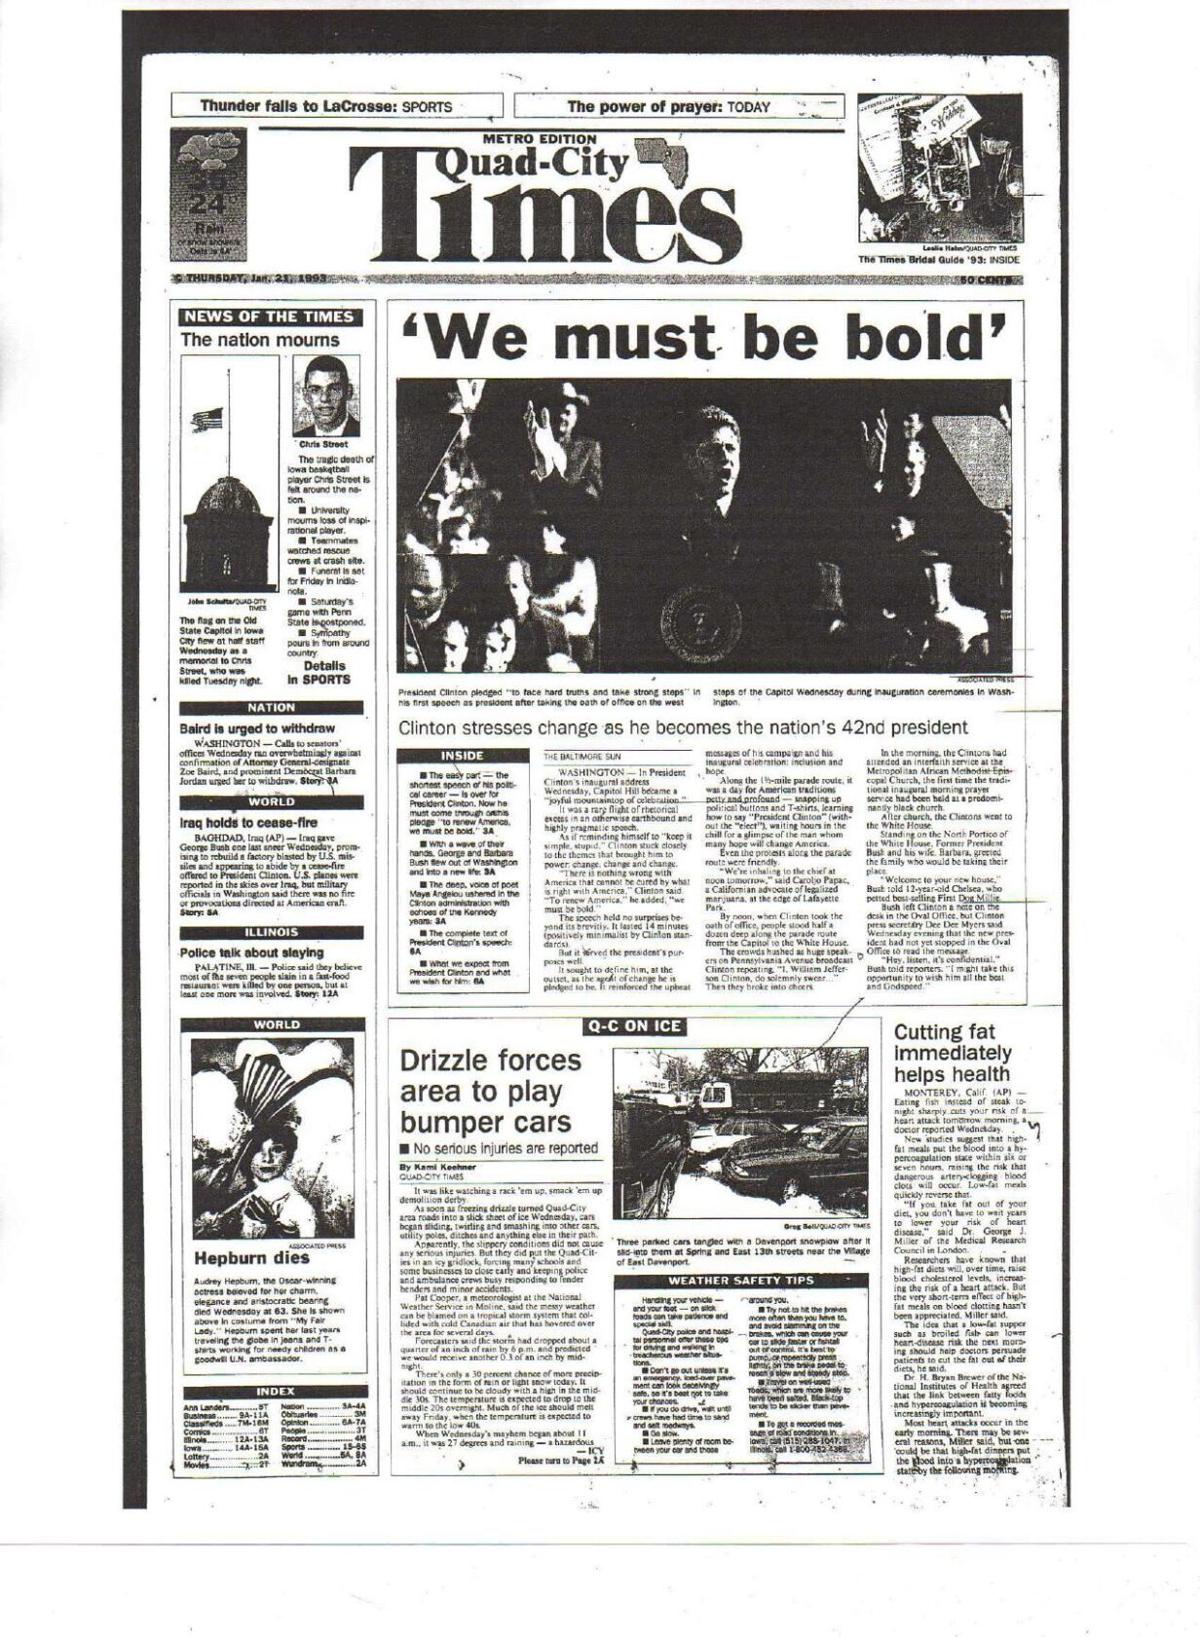 Jan. 21, 1993 Quad-City Times front page